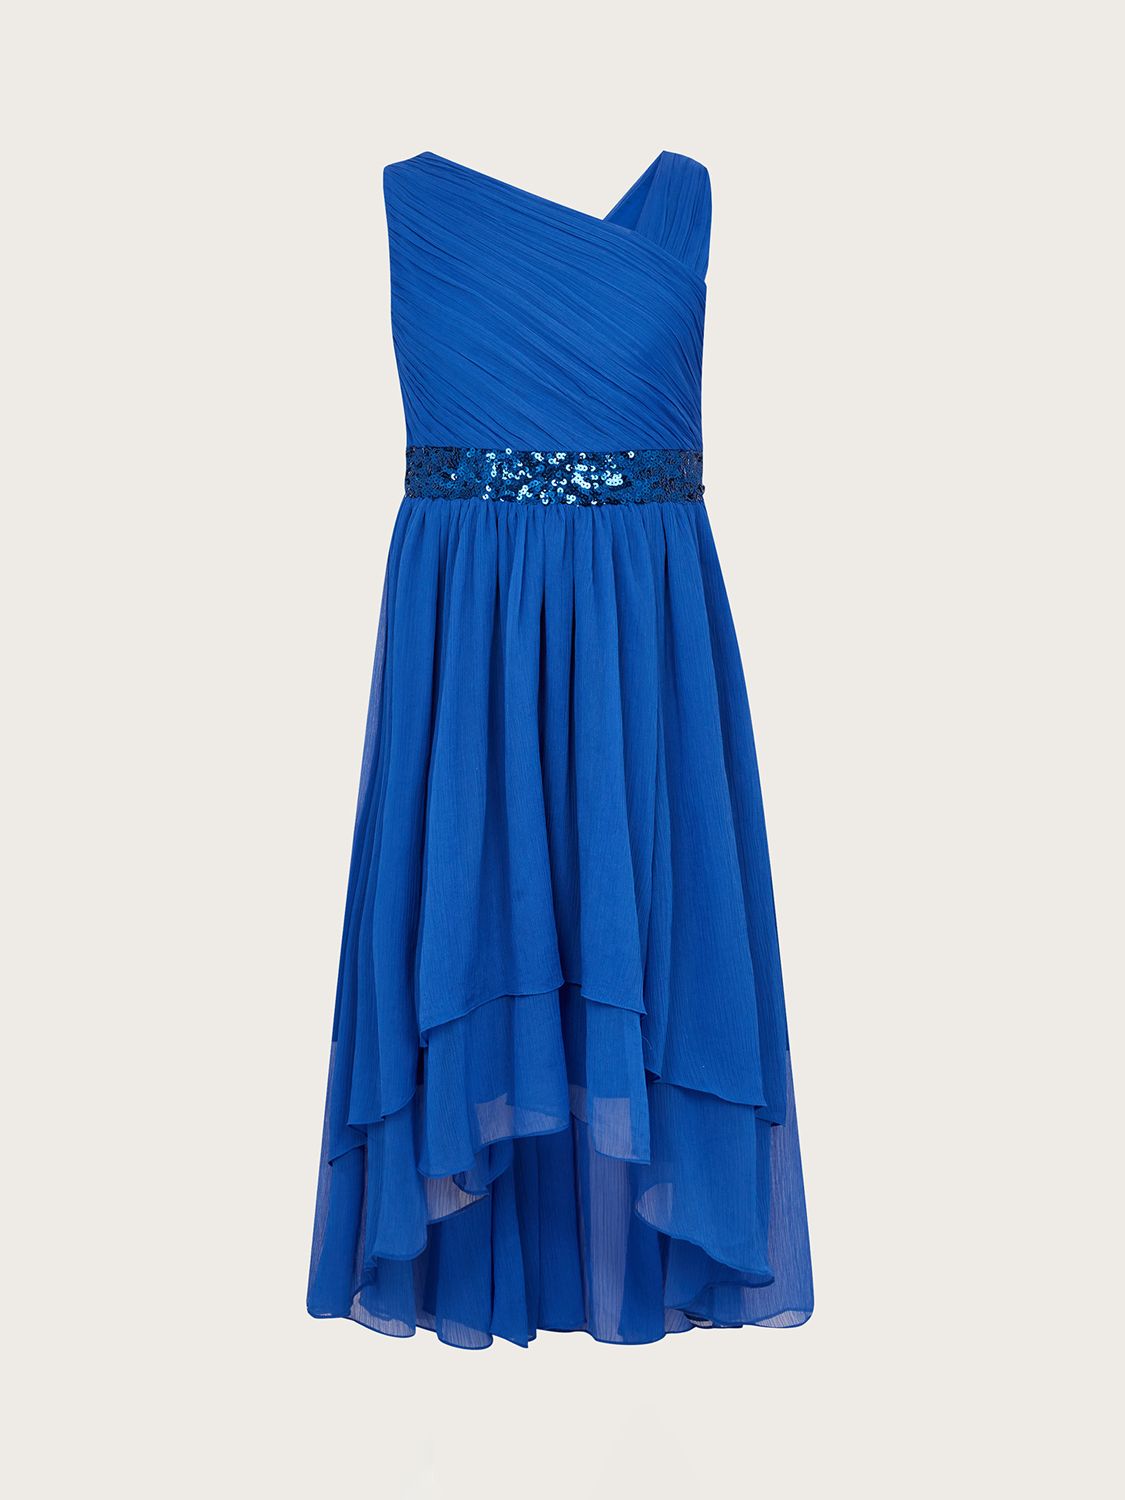 Monsoon Kids' Abigail Asymmetric Party Dress, Blue, 8 years